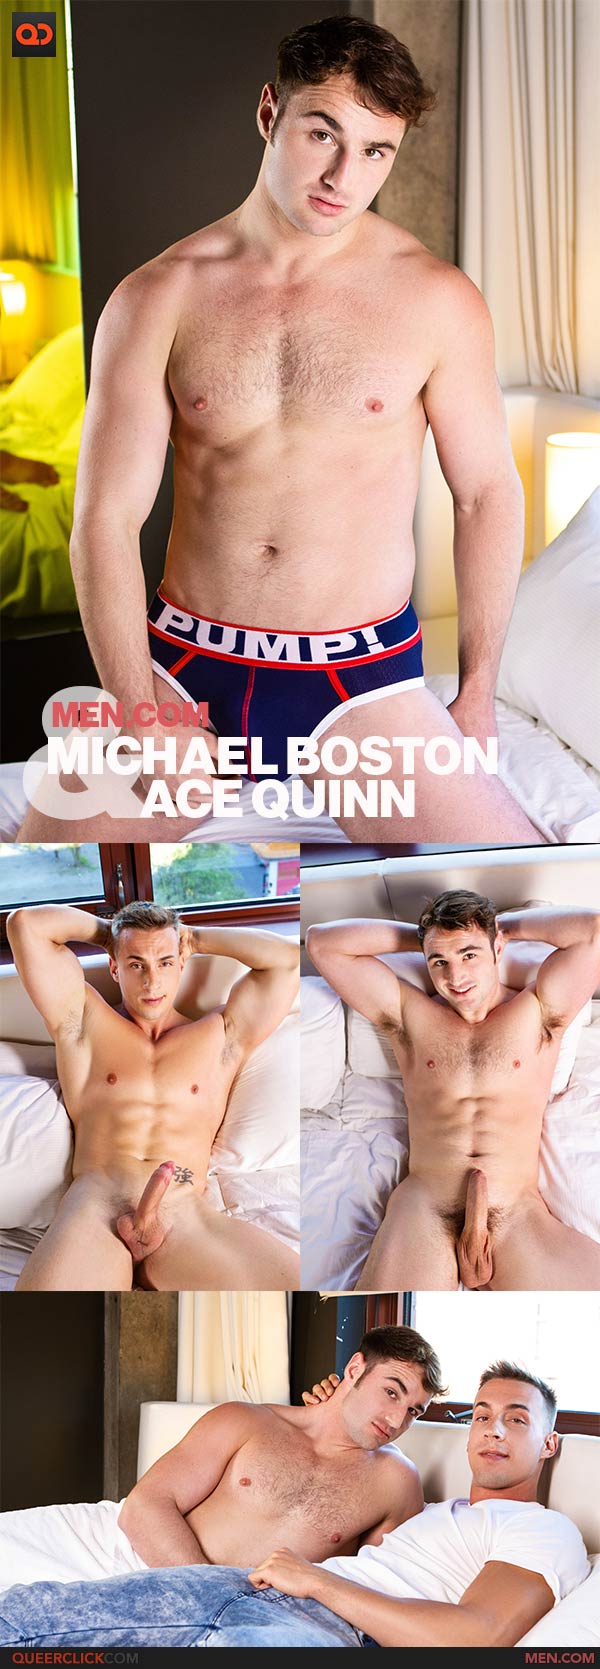 Men.com: Michael Boston and Ace Quinn